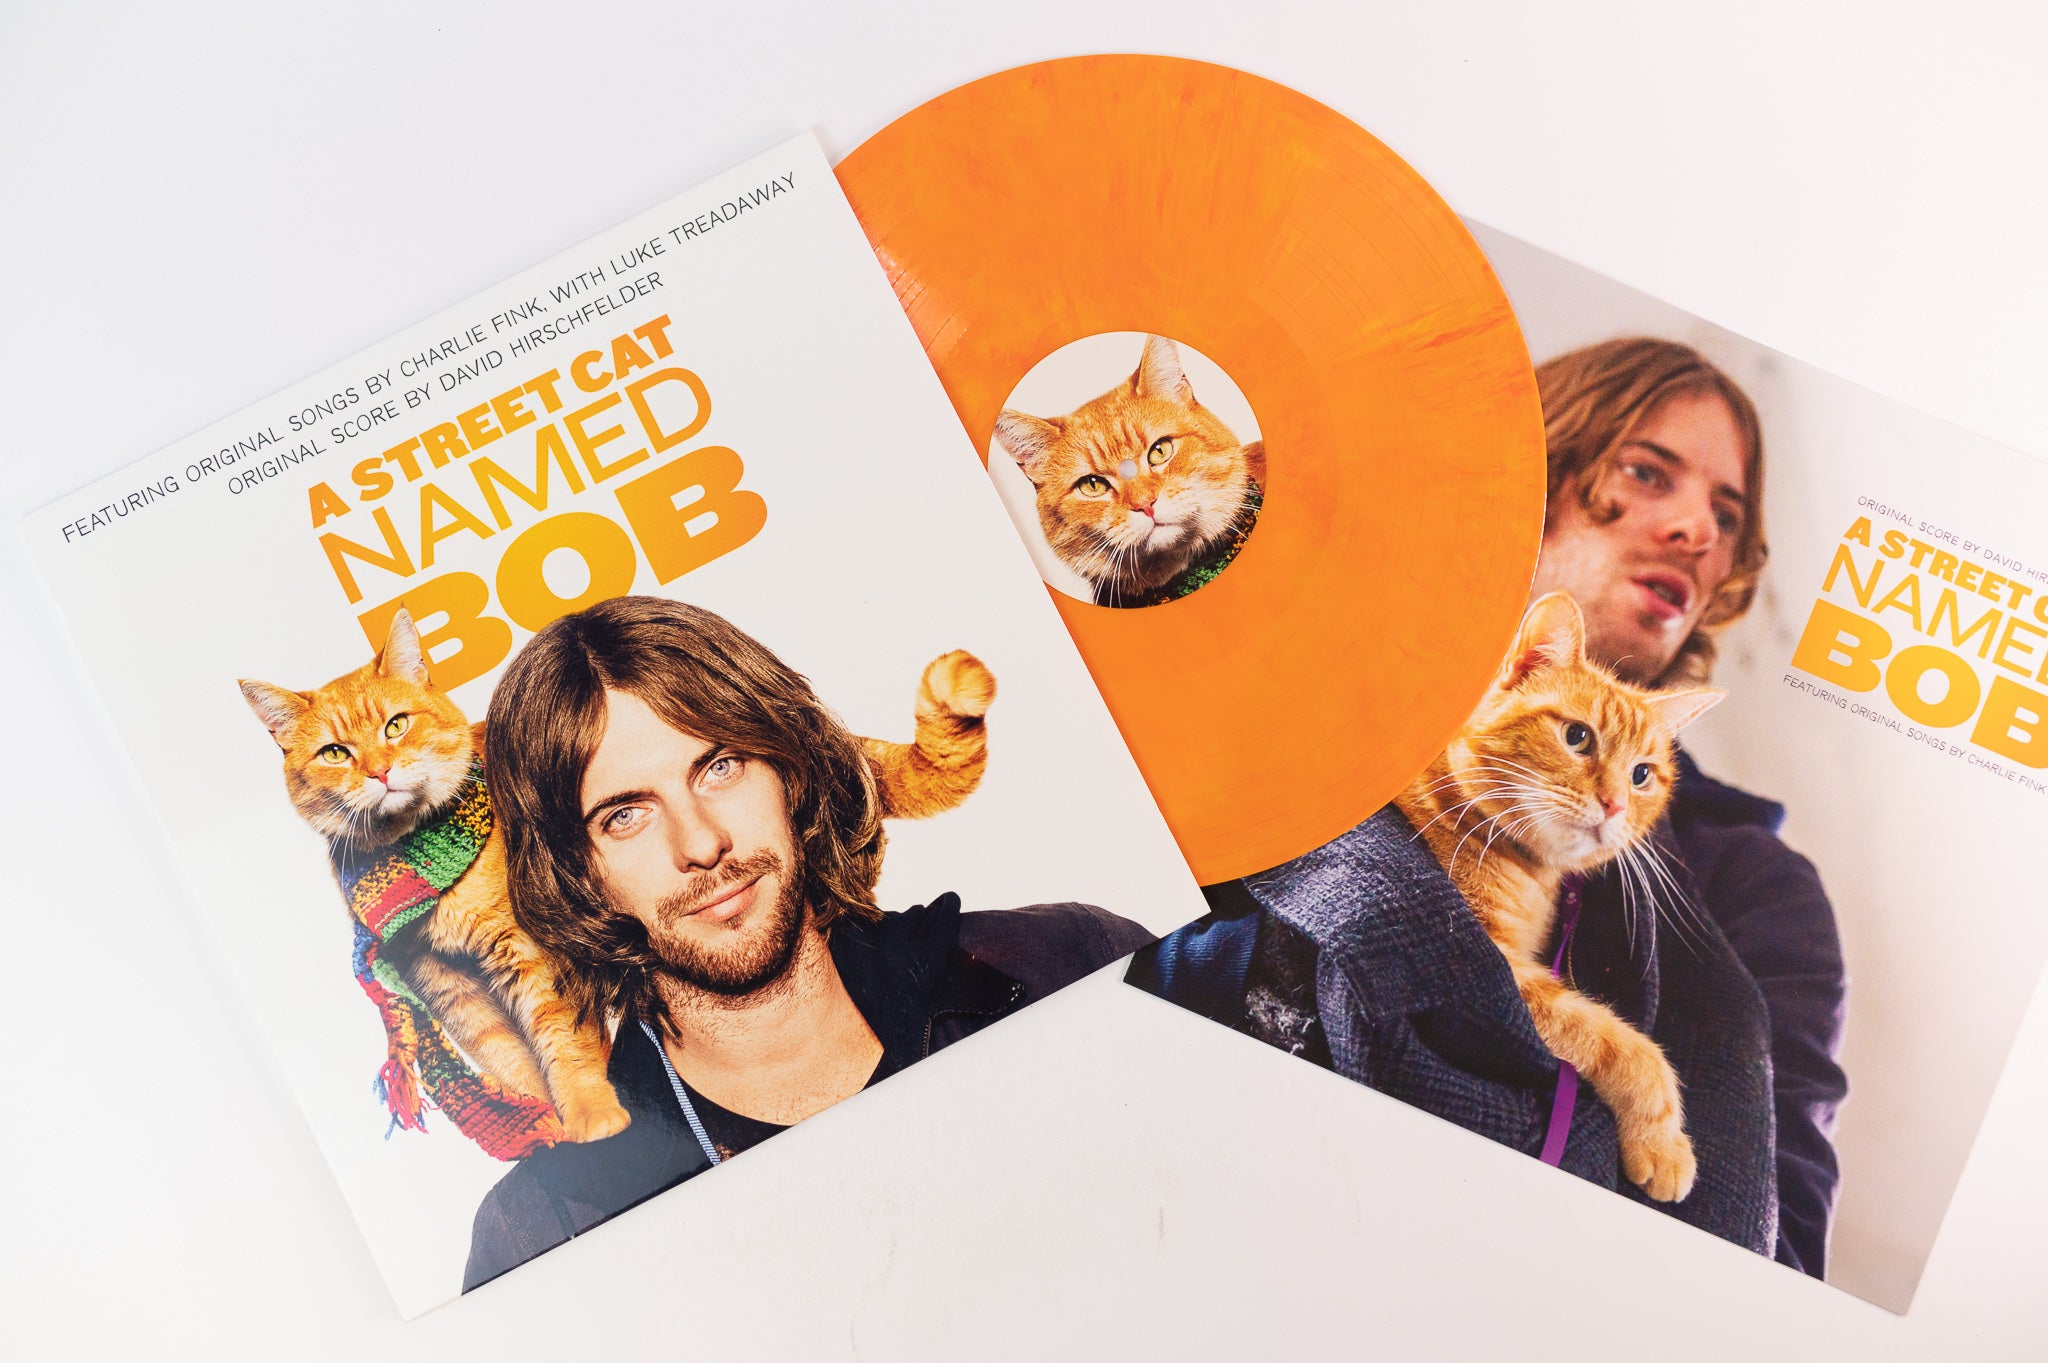 David Hirschfelder, Charlie Fink With Luke Treadaway - A Street Cat Named Bob (Soundtrack) on Music on Vinyl Limited Numbered Orange Vinyl